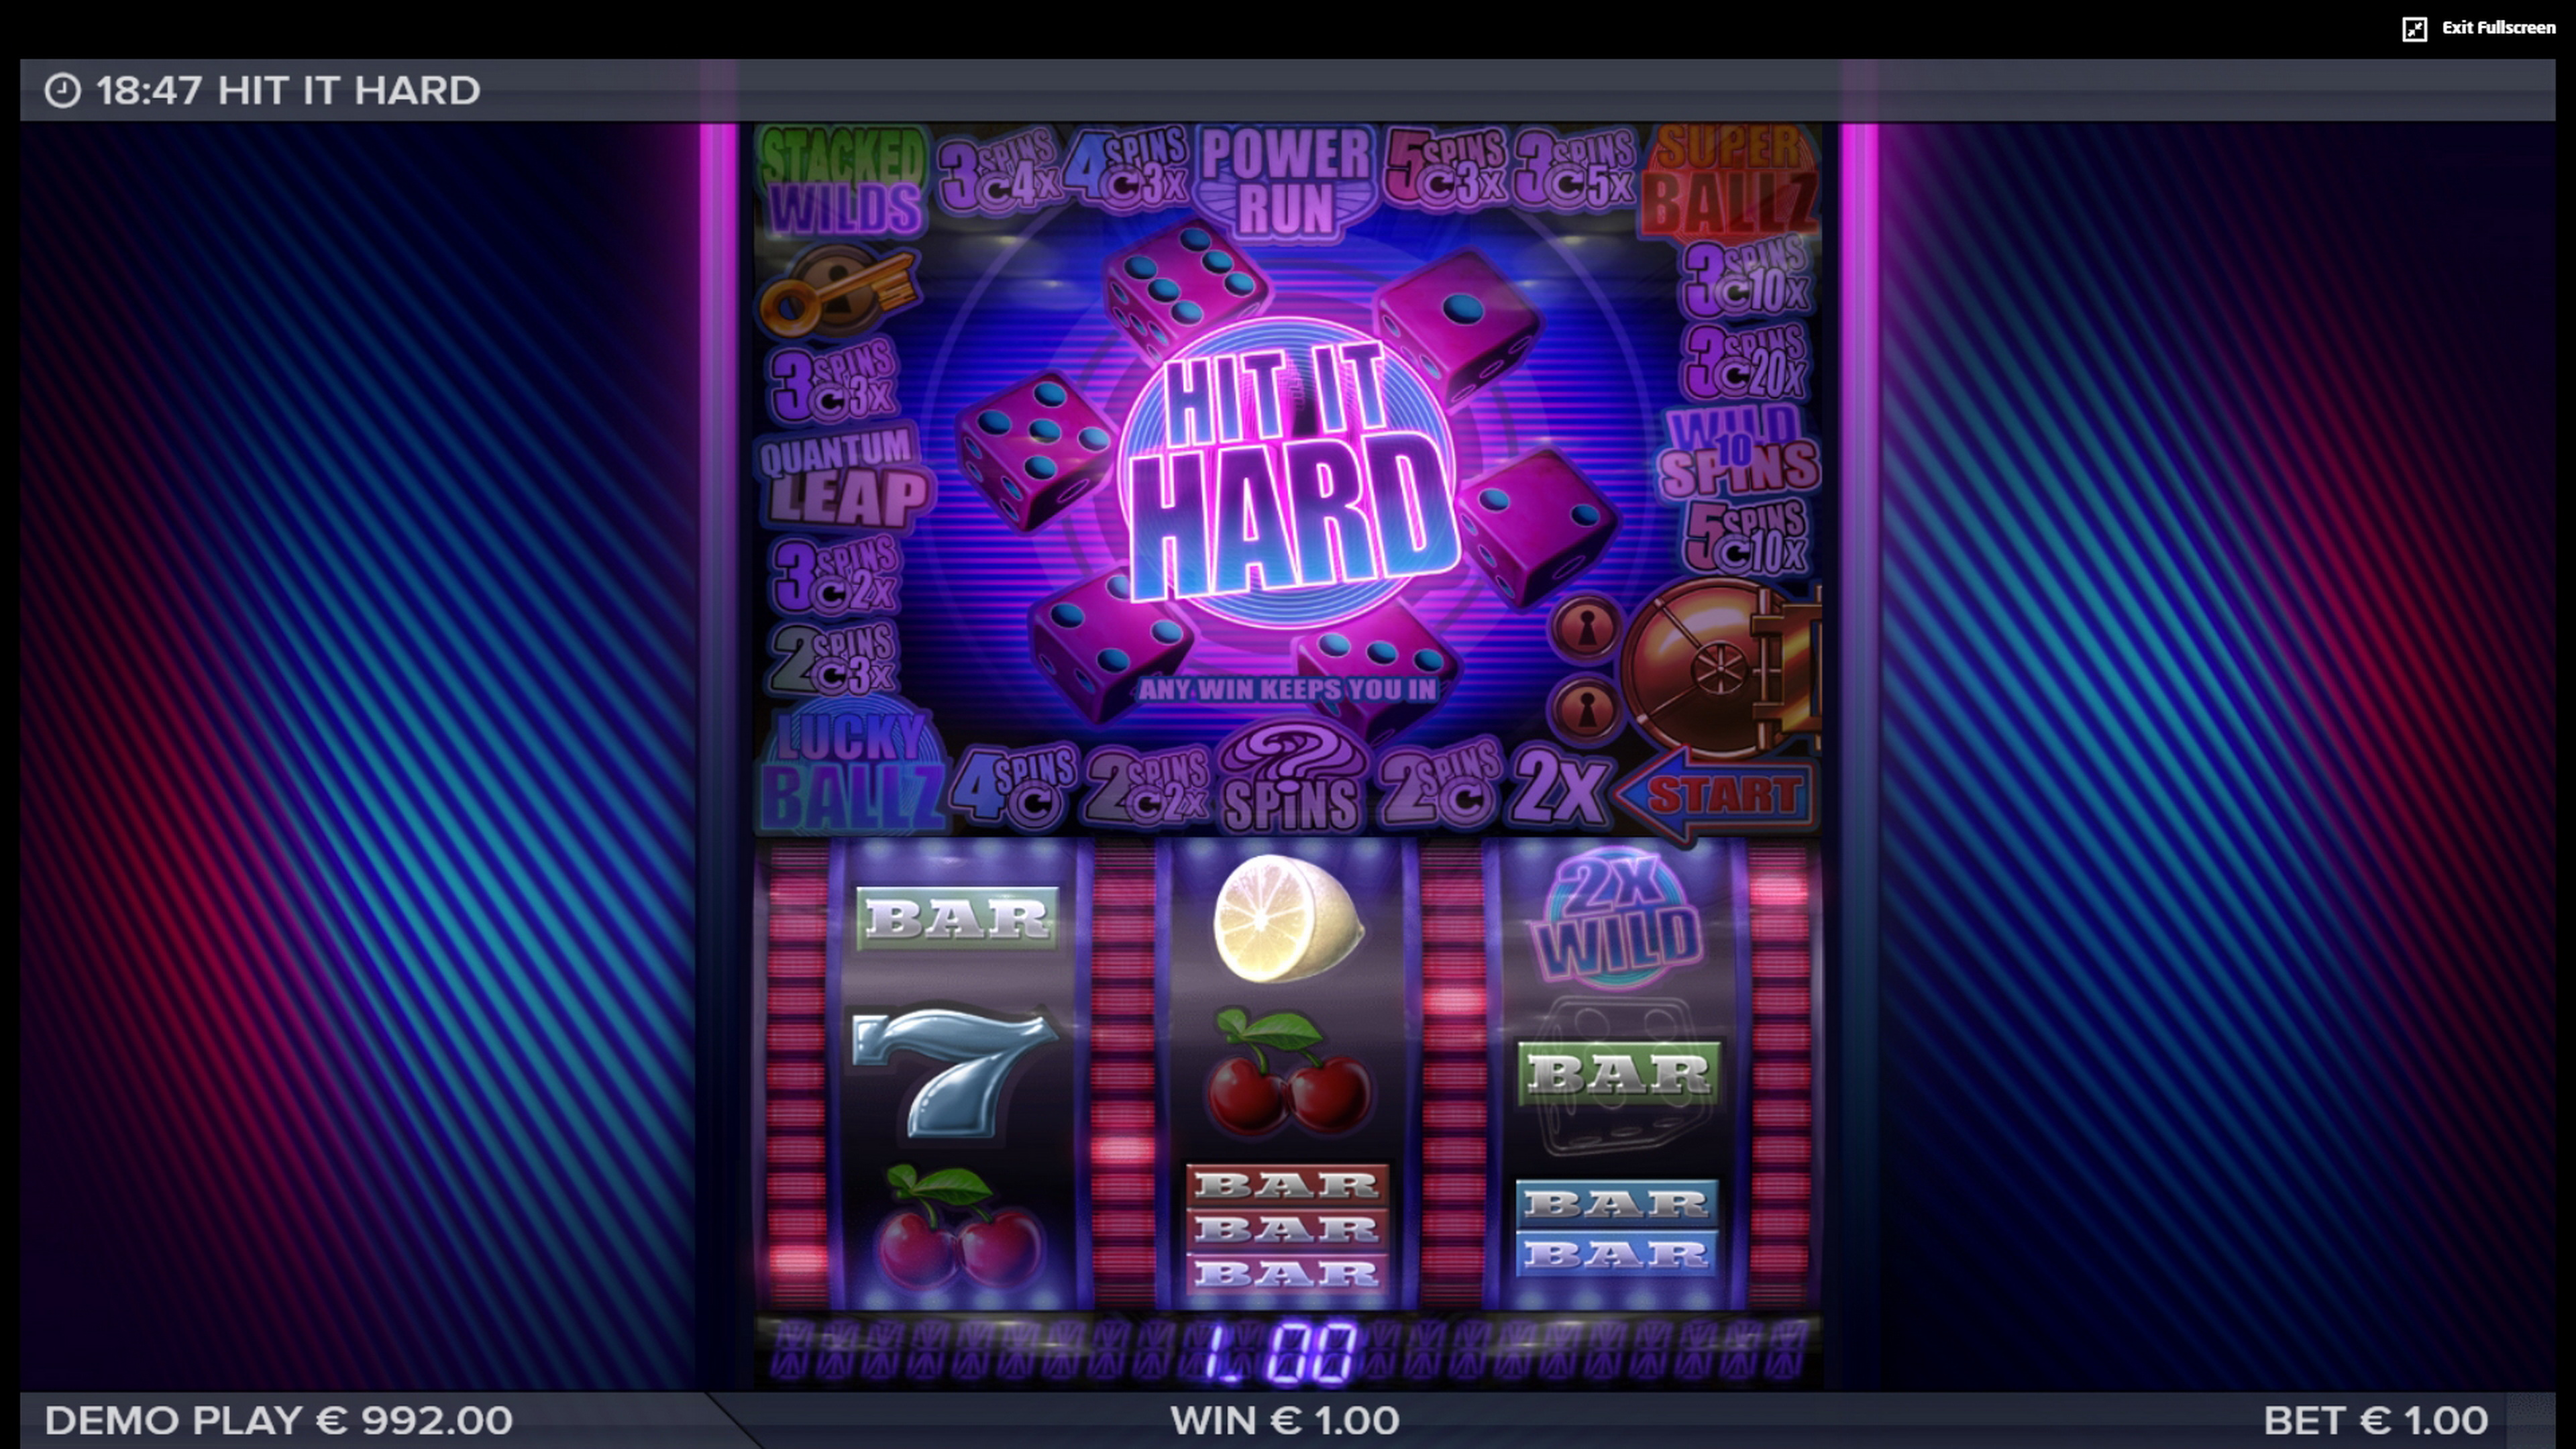 Win Money in Hit It Hard Free Slot Game by ELK Studios